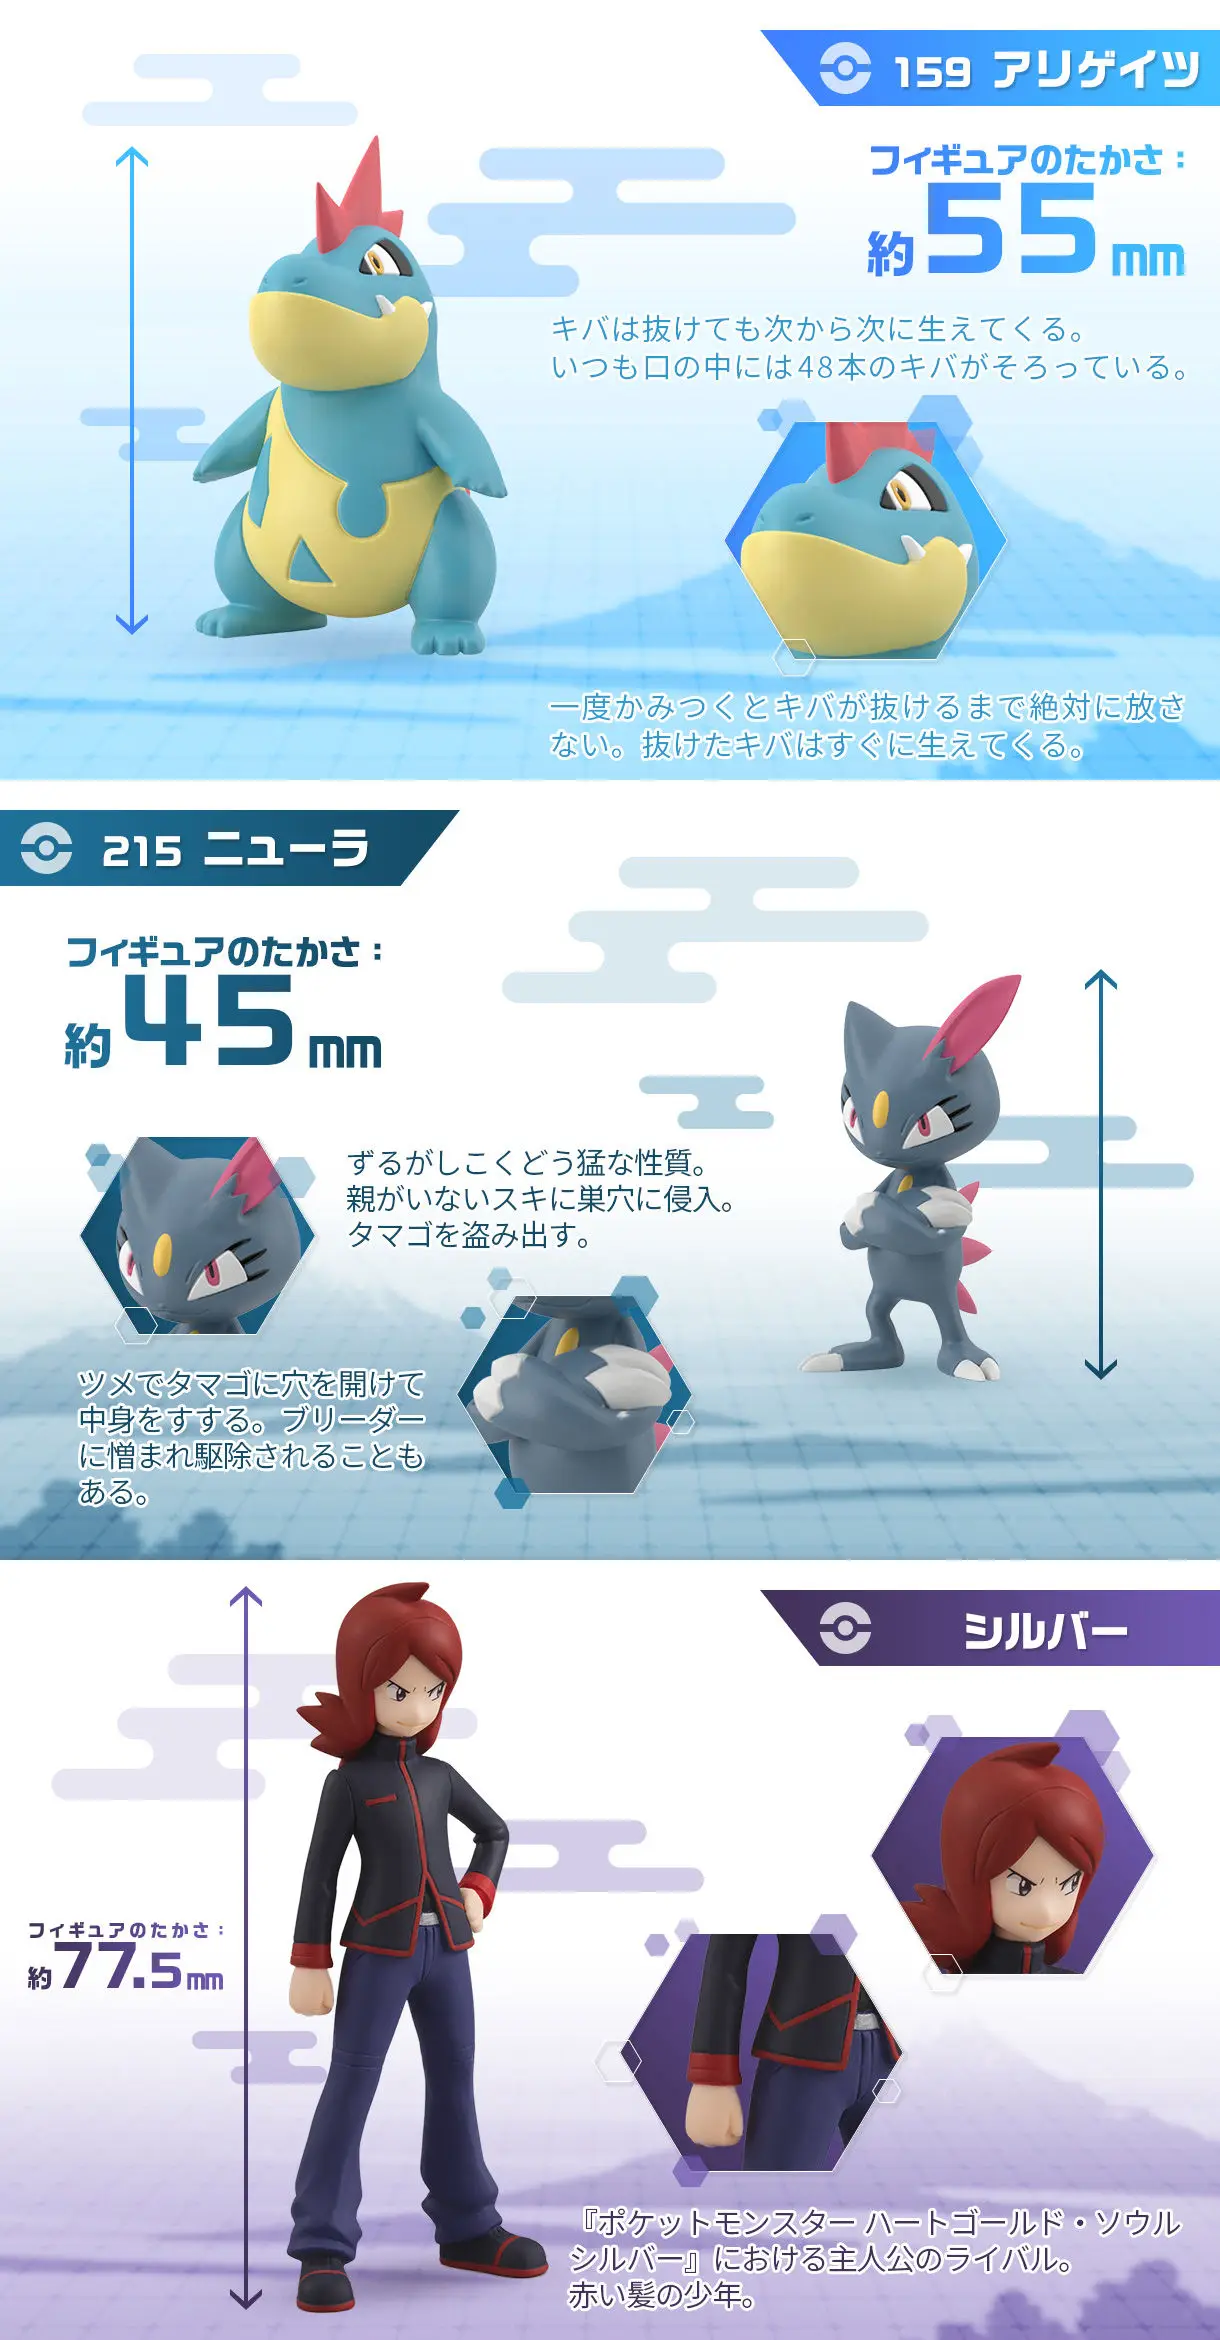 Bandai Limited Original Pokemon Pb 1 Scale World Doll Silver Alligates Nyula Croconaw Sneasel Action Figure Collection Model Action Figures Aliexpress